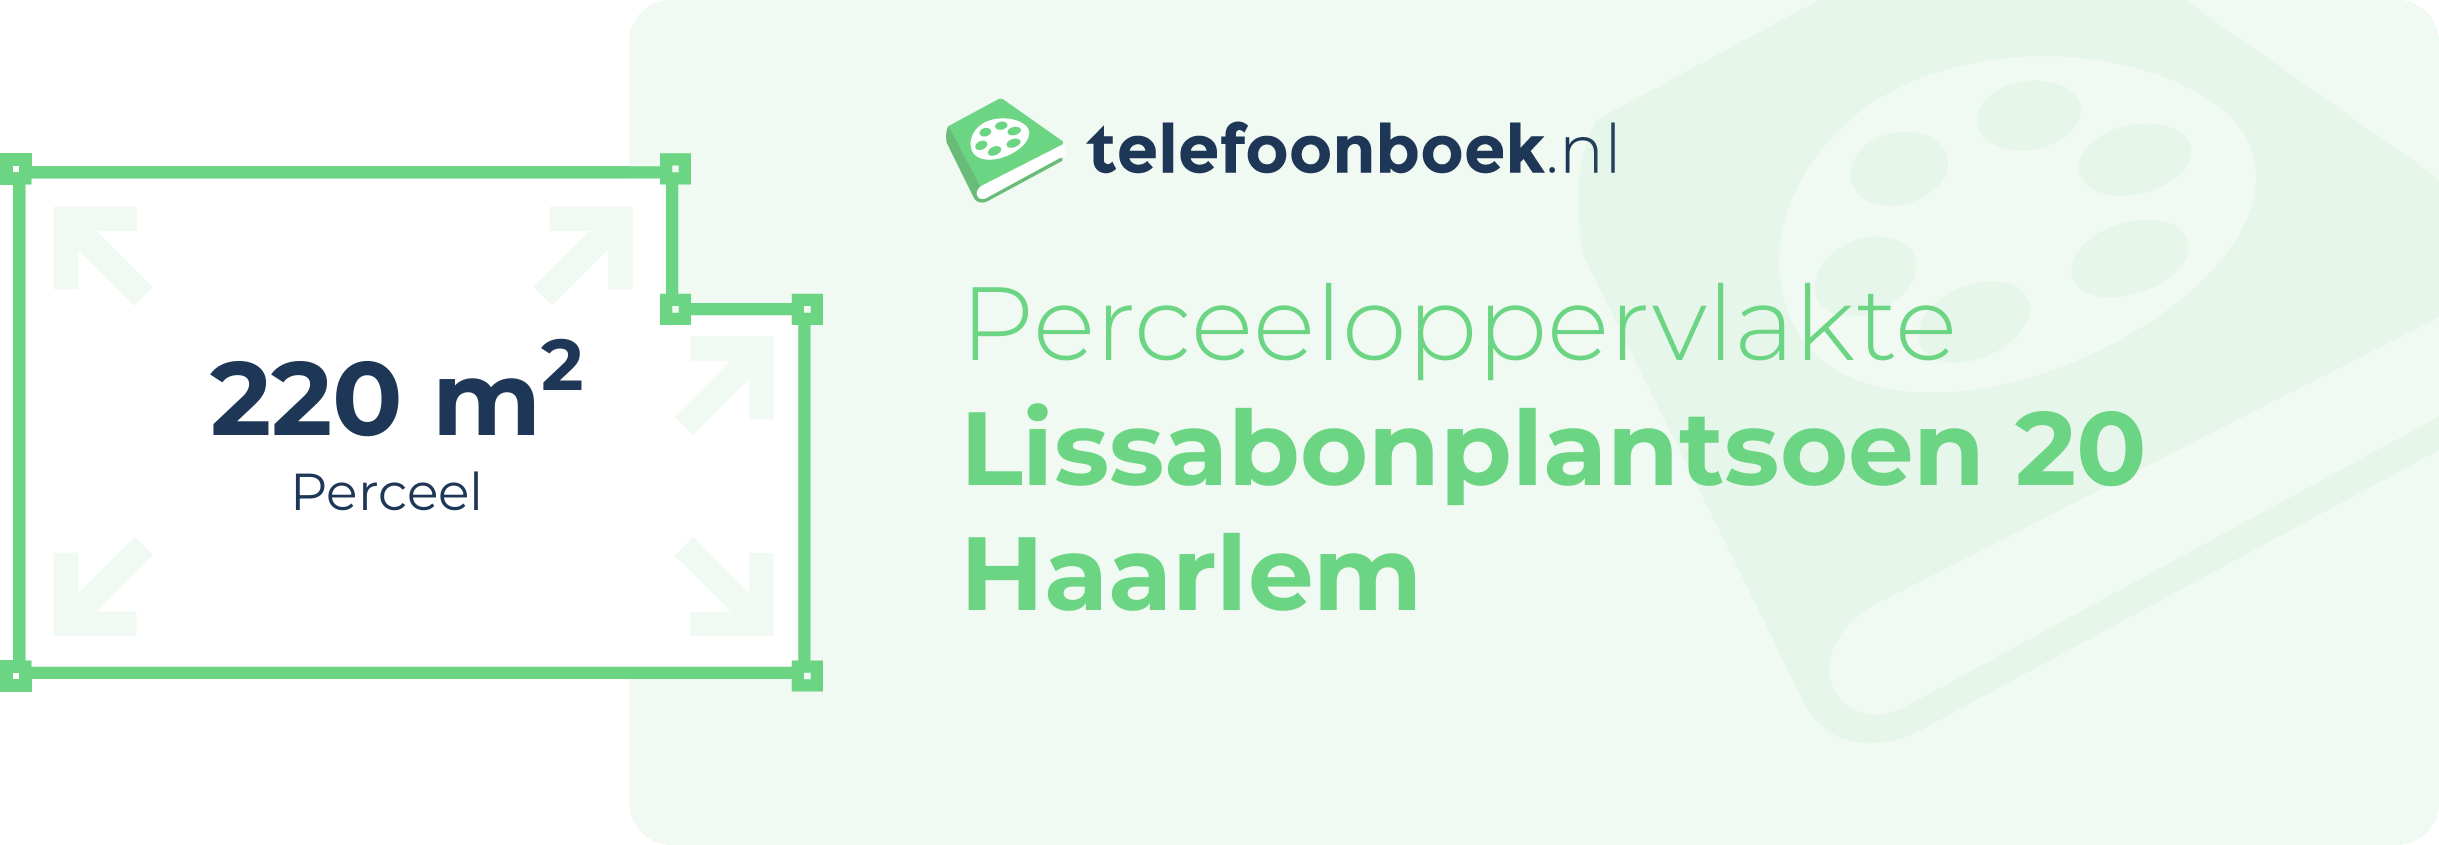 Perceeloppervlakte Lissabonplantsoen 20 Haarlem